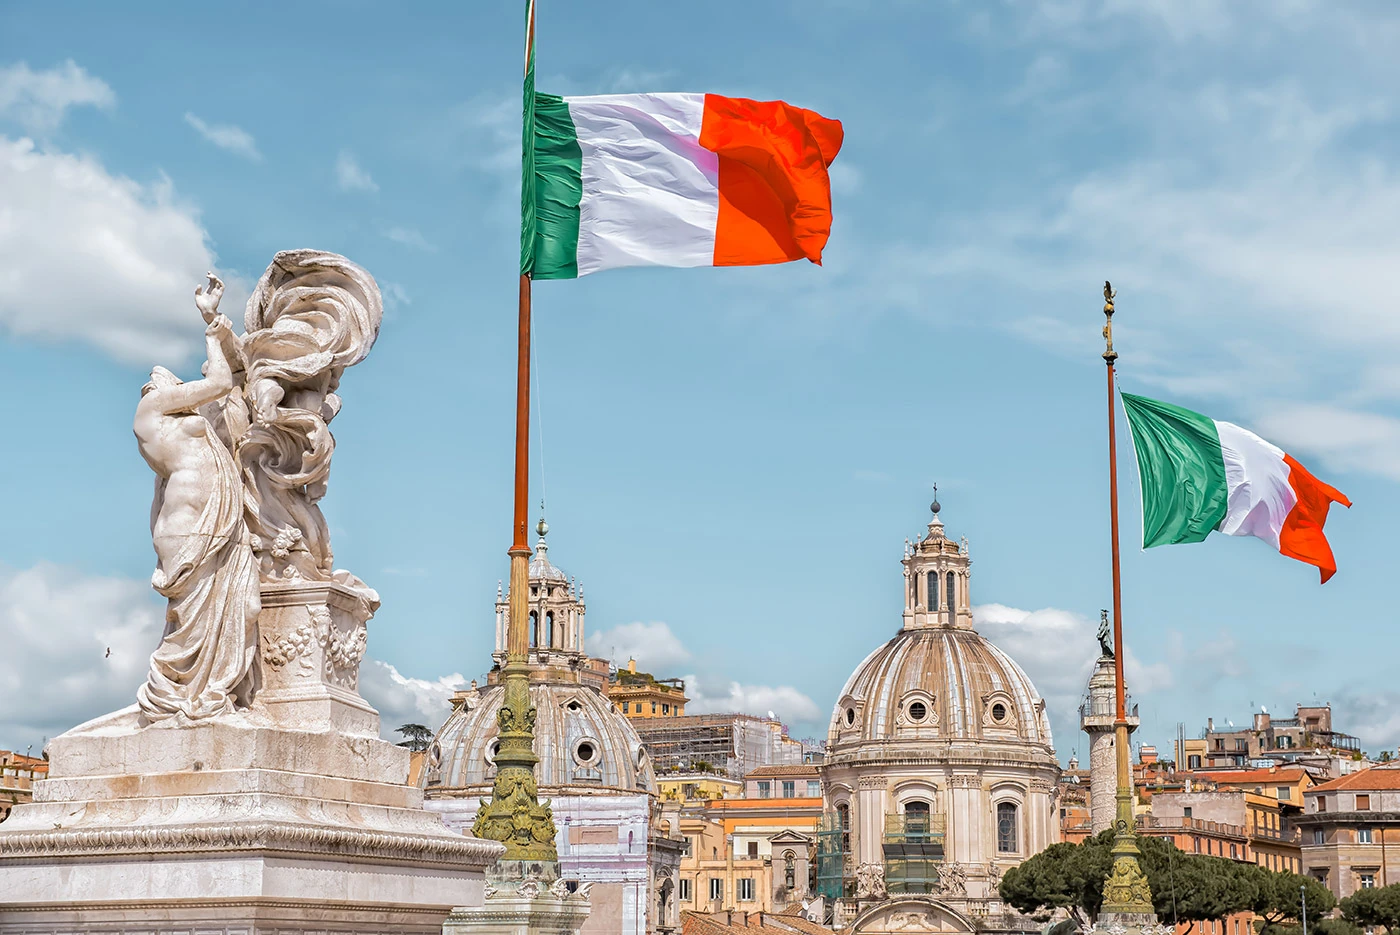 Countries and Nationalities in Italian - Italian Flags in Piazza Venezia Rome